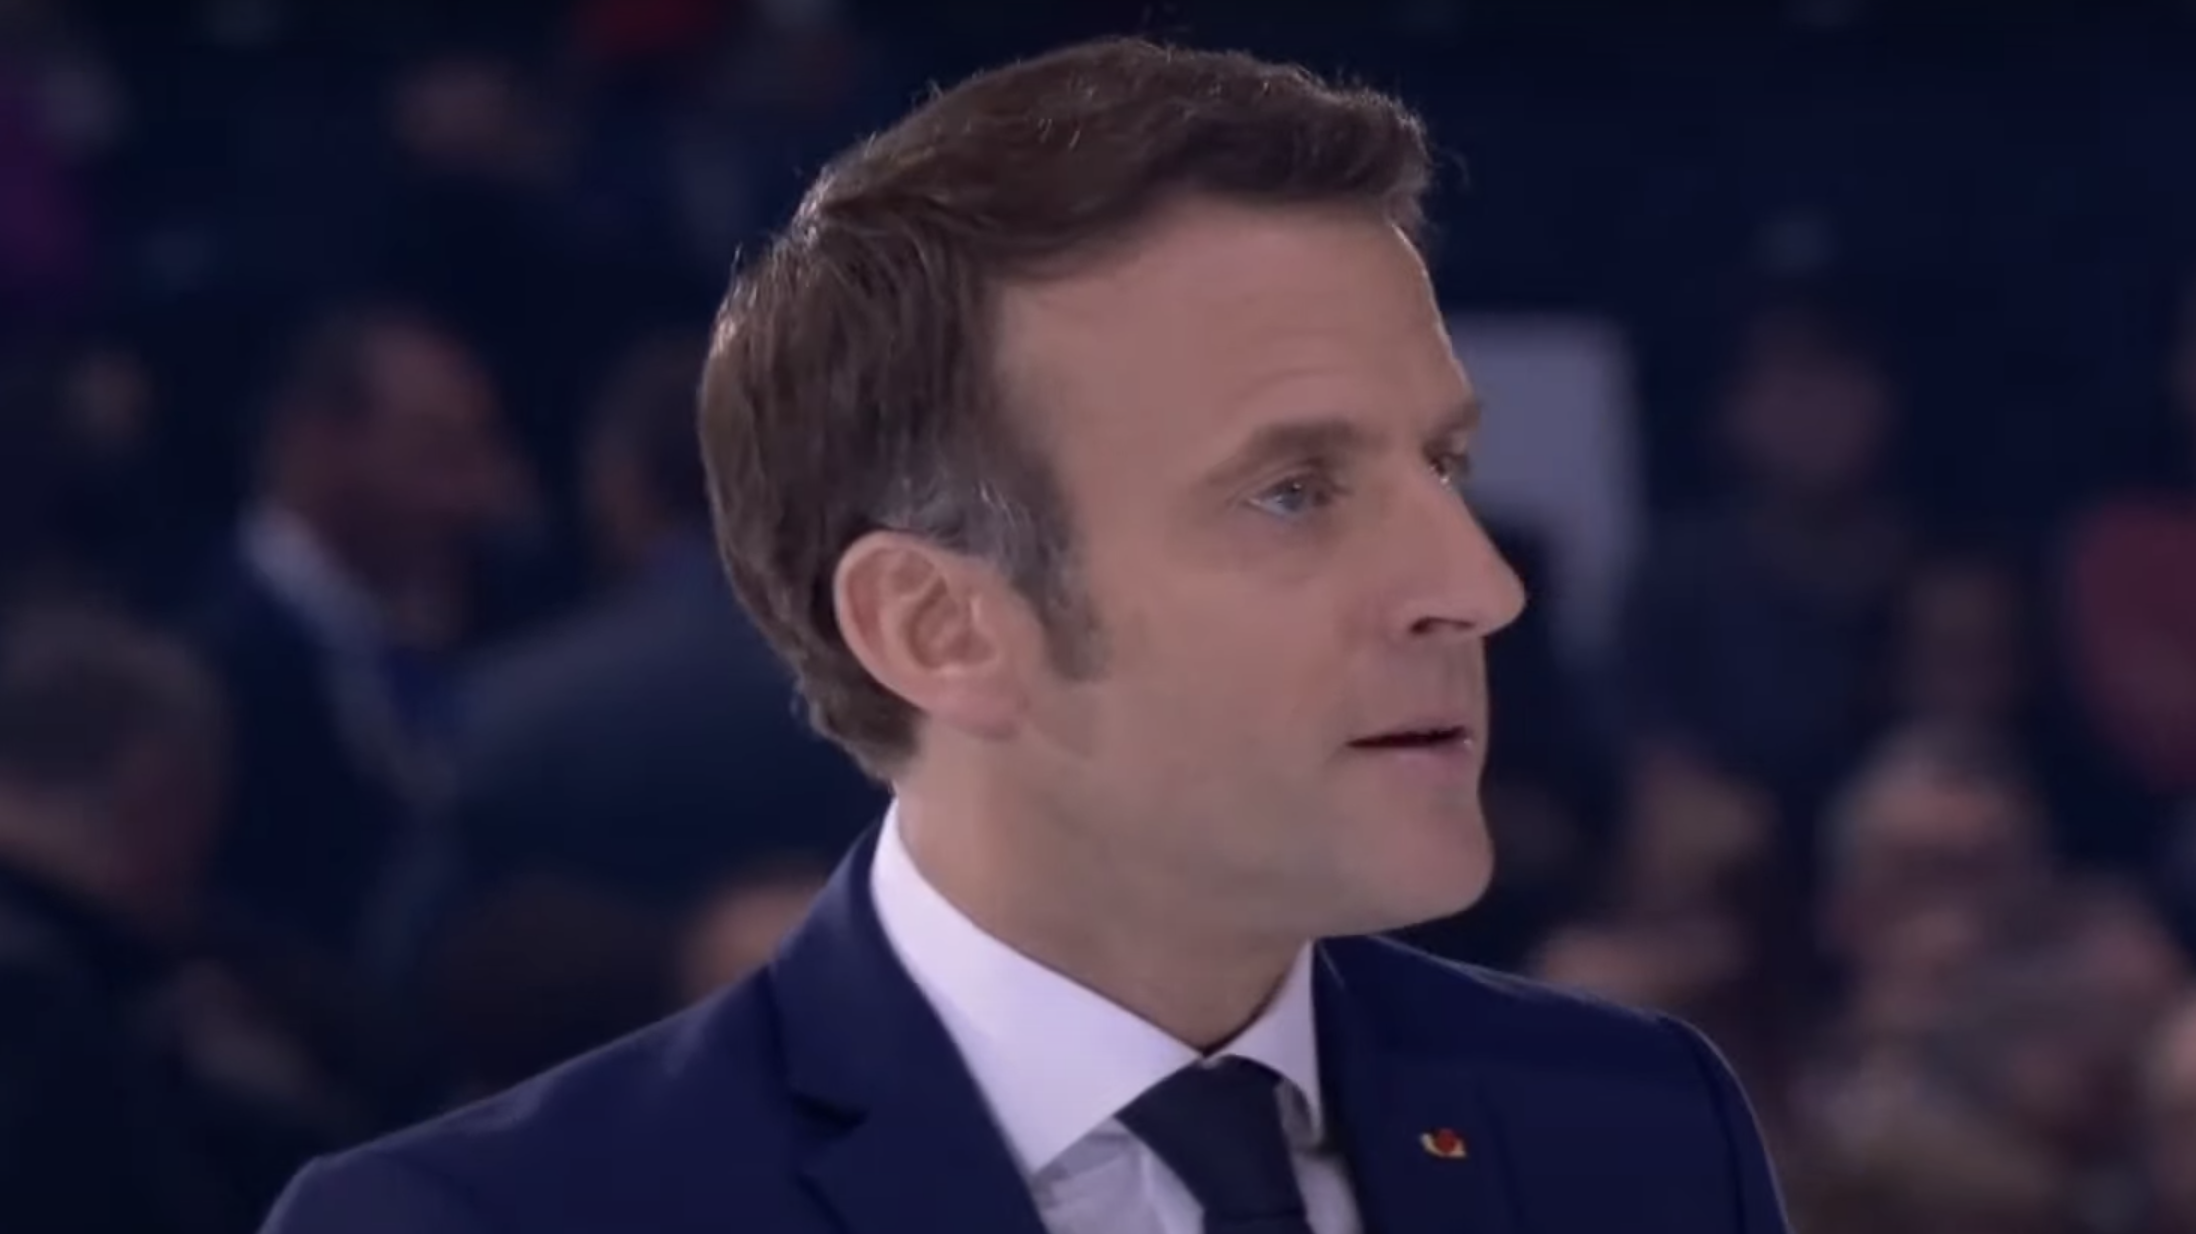 Macron